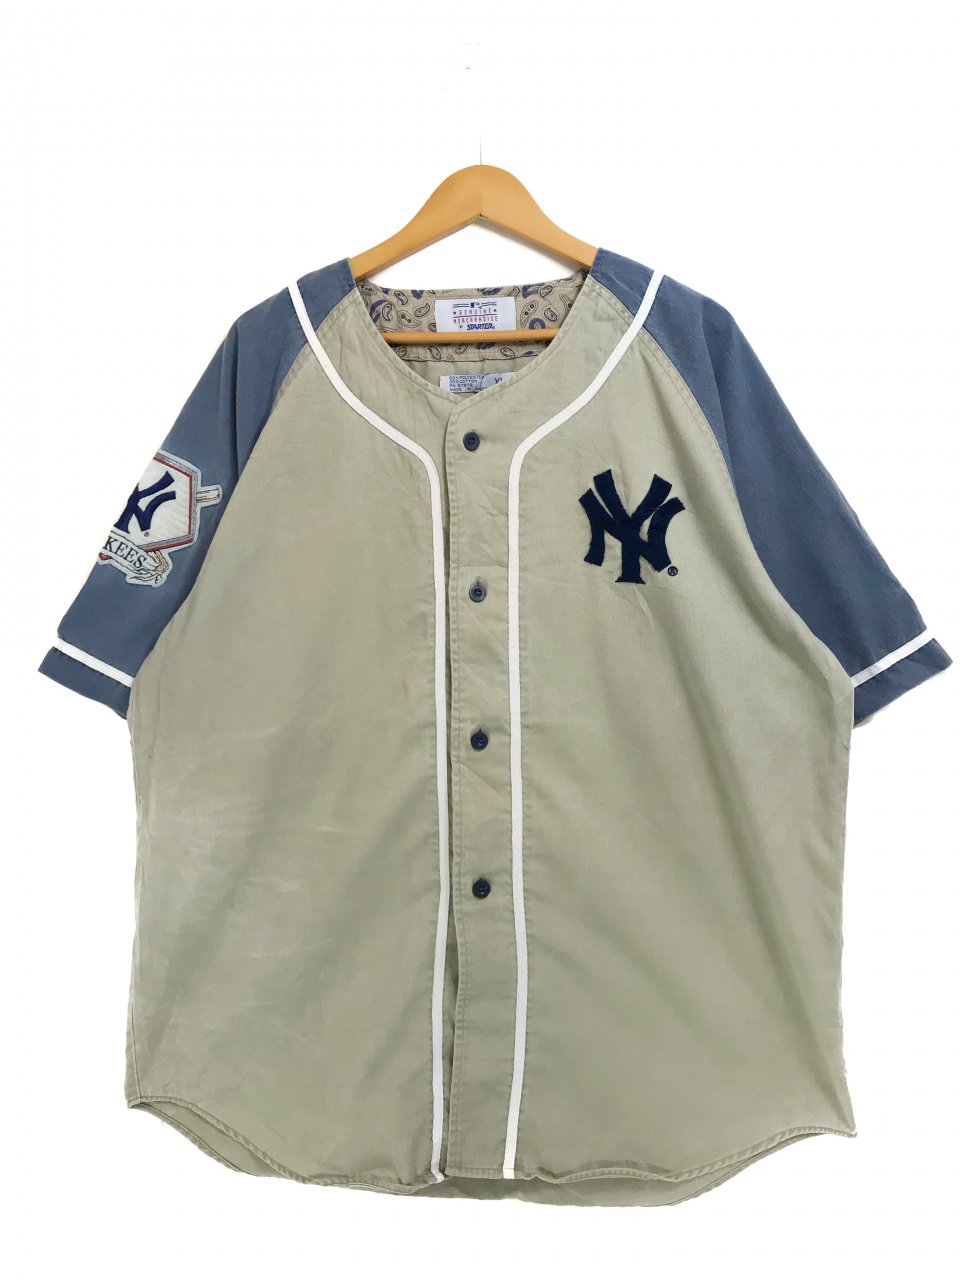 90s STARTER "NY YANKEES" Baseball Shirt カーキ青 XL スターター ニューヨークヤンキース